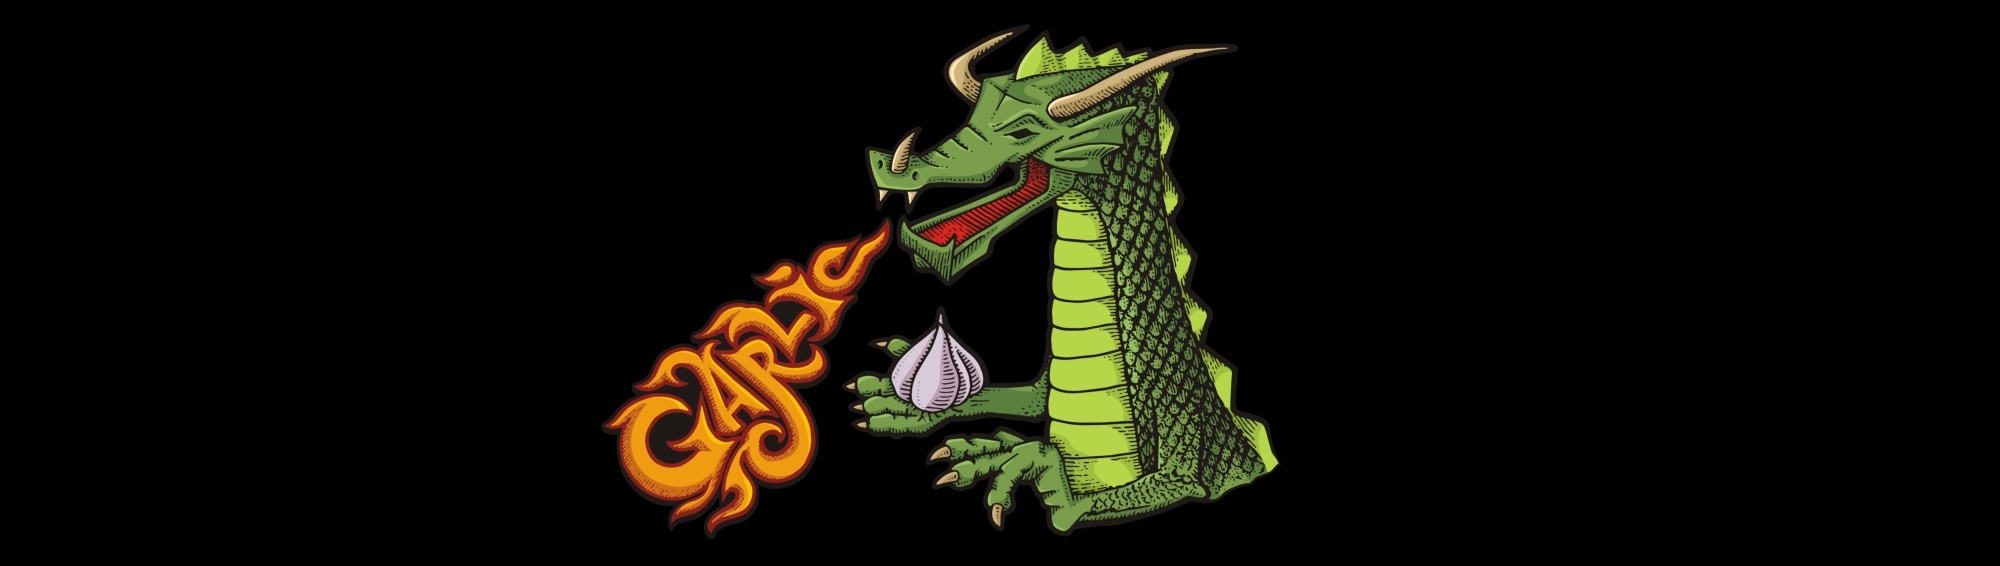 Garlic Dragon